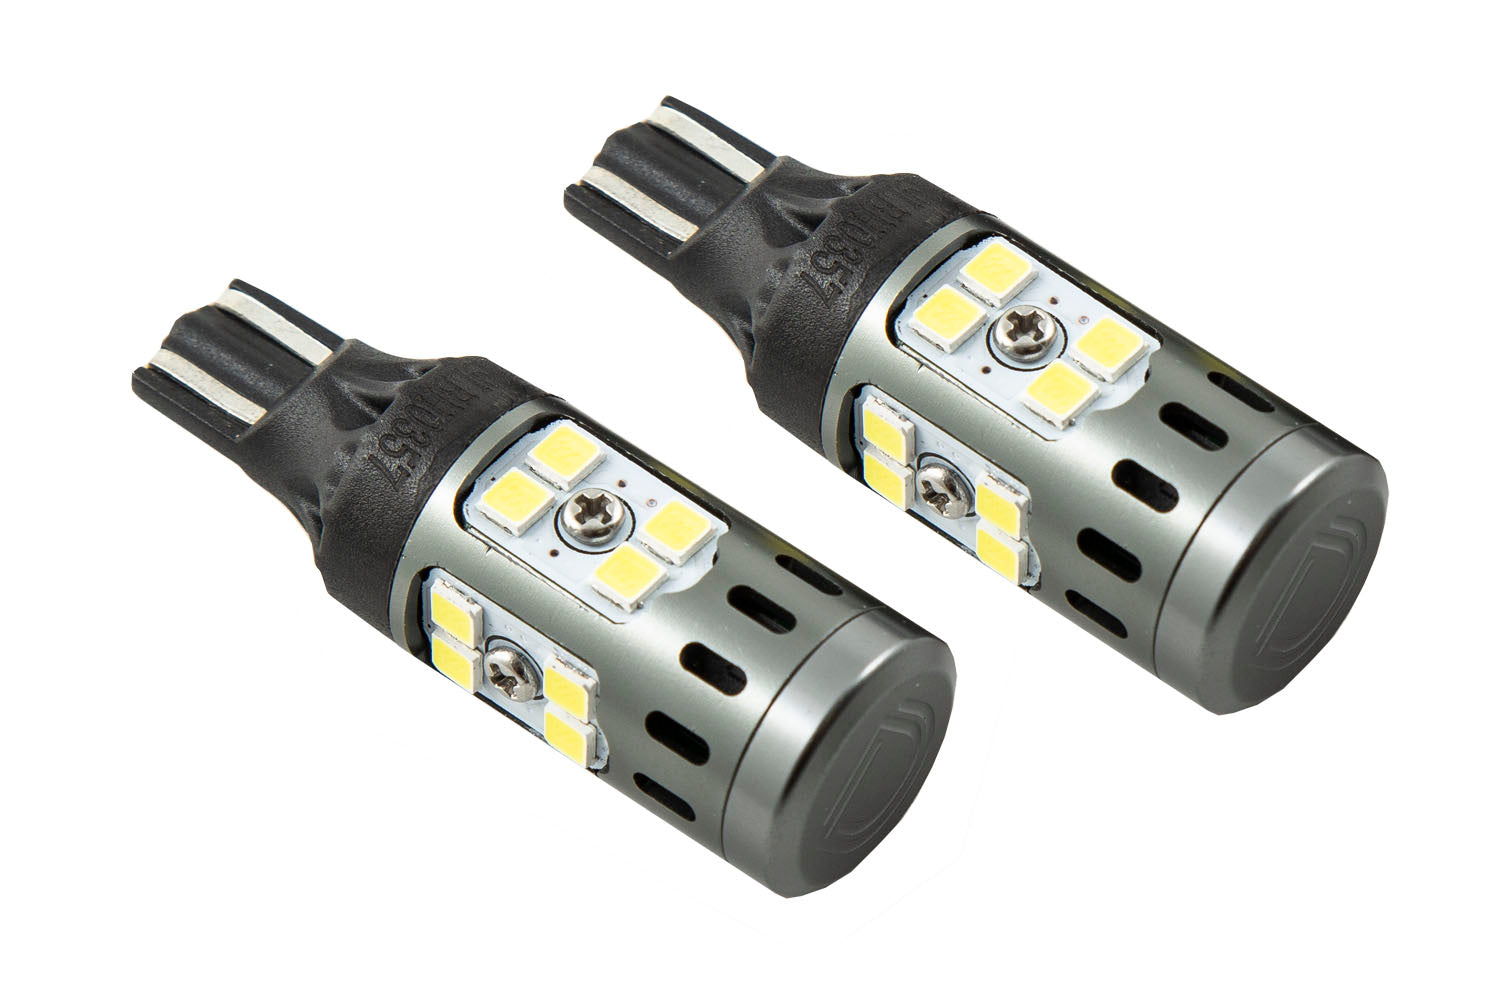 Backup LEDs for 2014-2021 Chevrolet Silverado (pair), XPR (720 lumens)